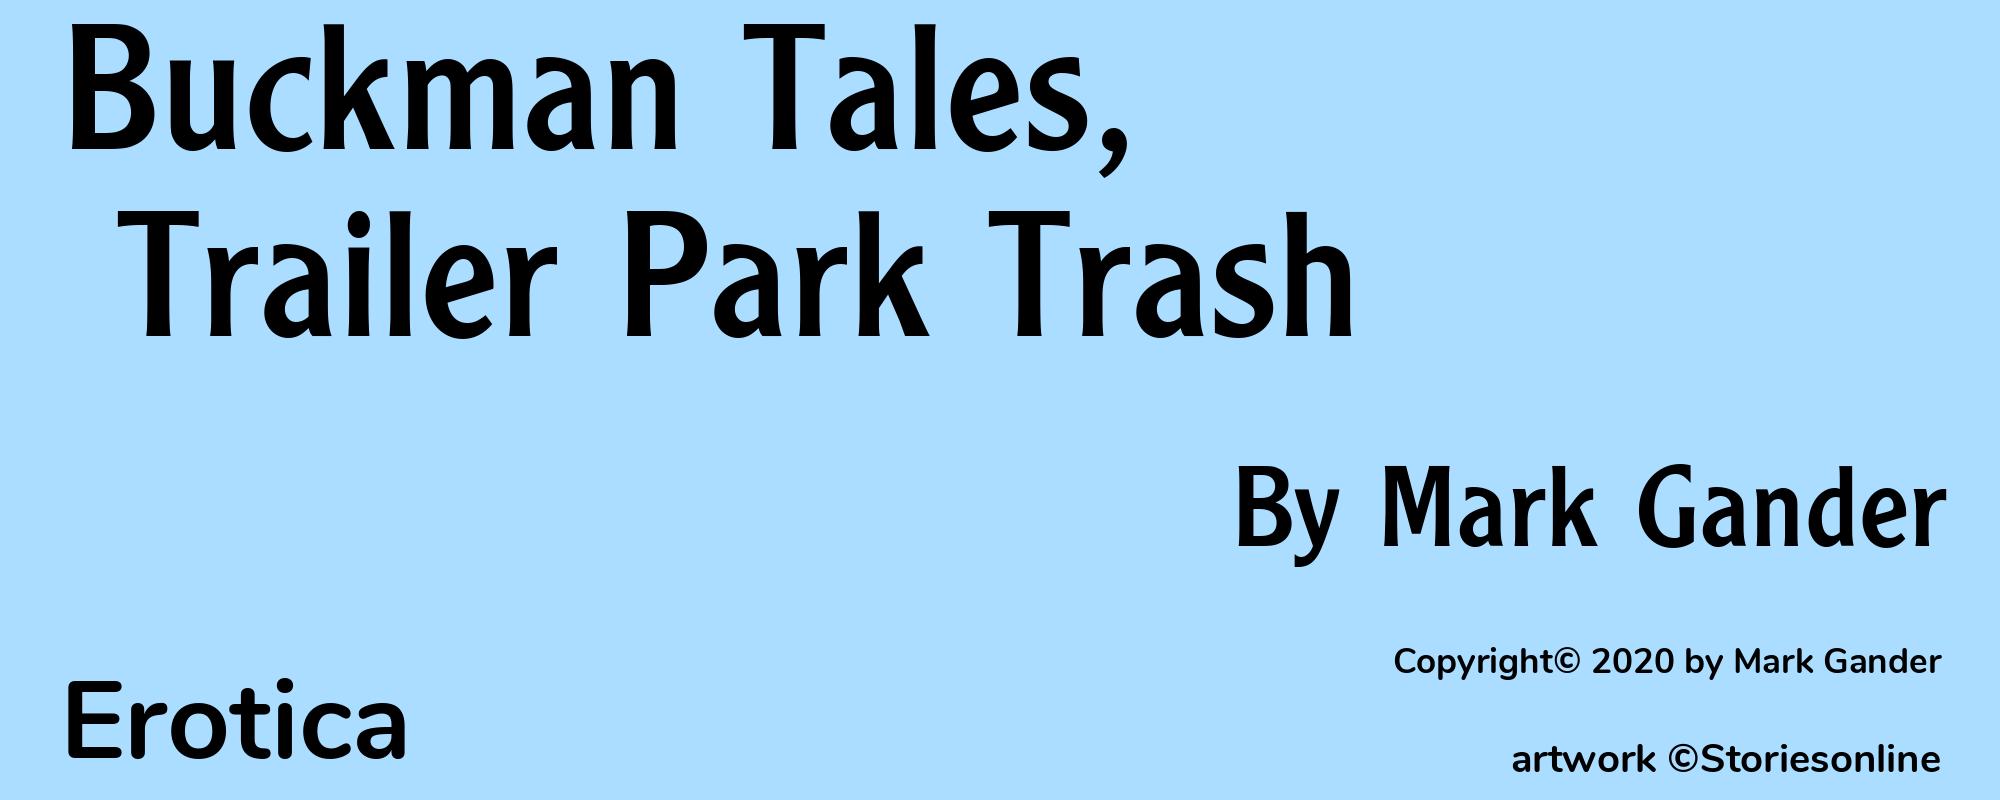 Buckman Tales, Trailer Park Trash - Cover